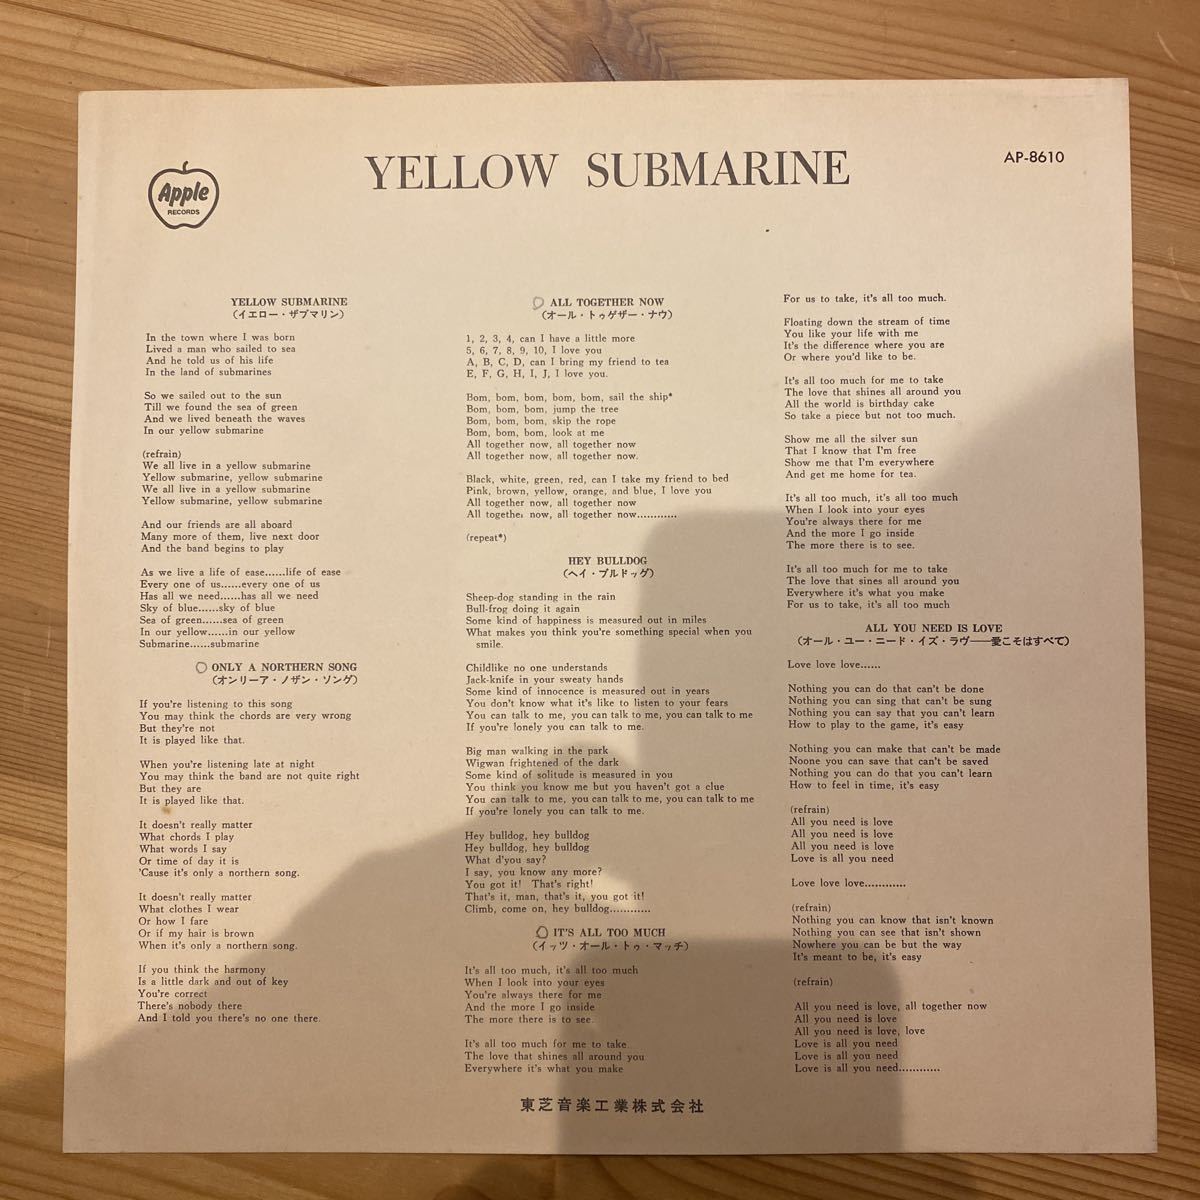  Beatles yellow submarine record 